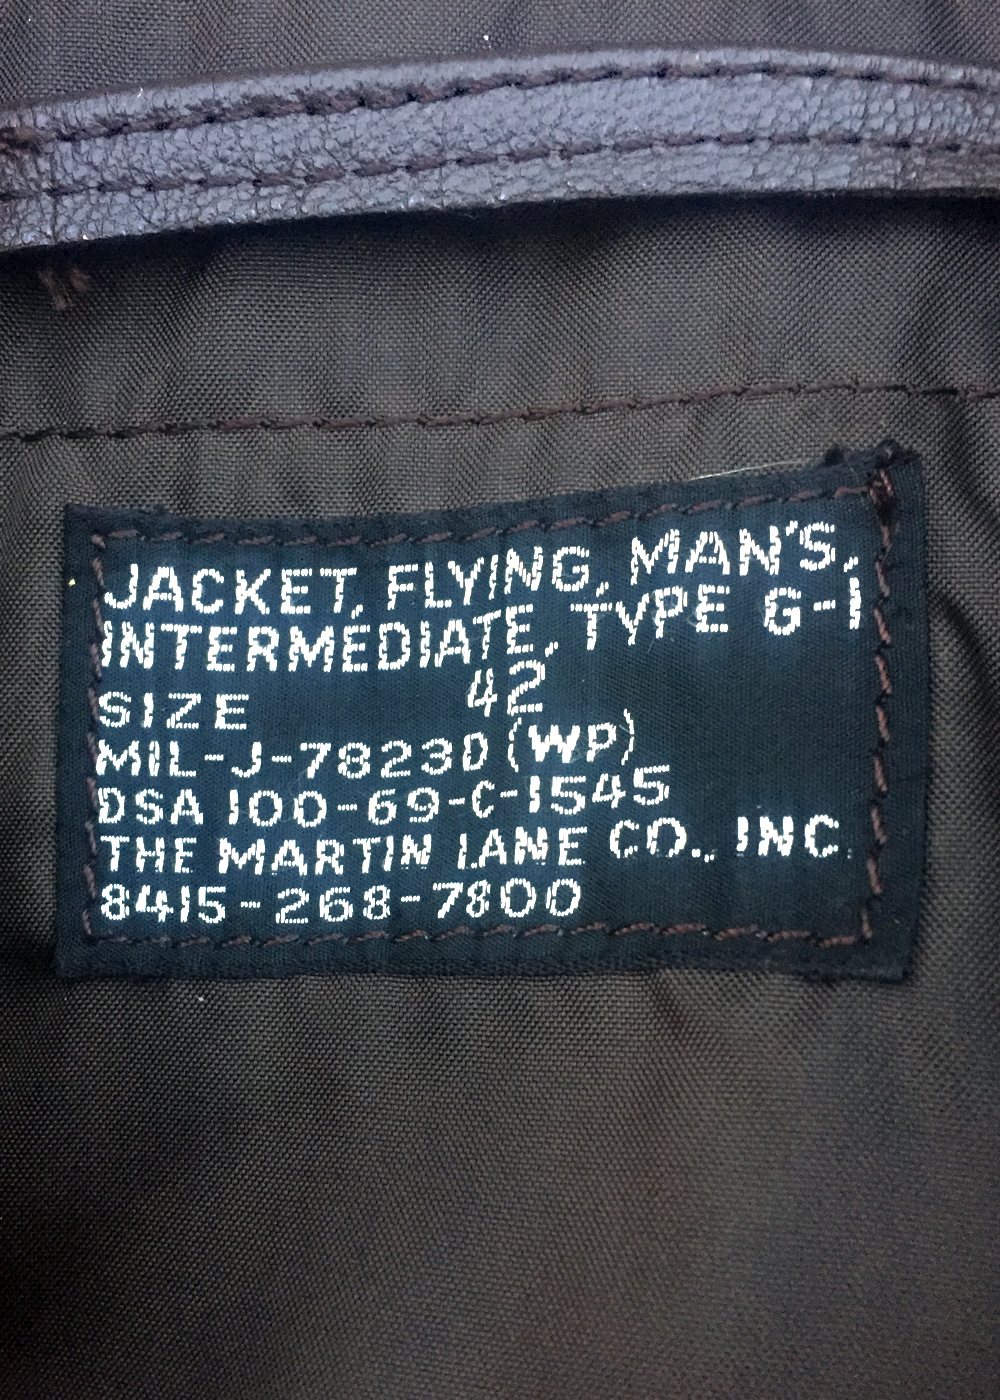 Martin Lane G-1 | Vintage Leather Jackets Forum